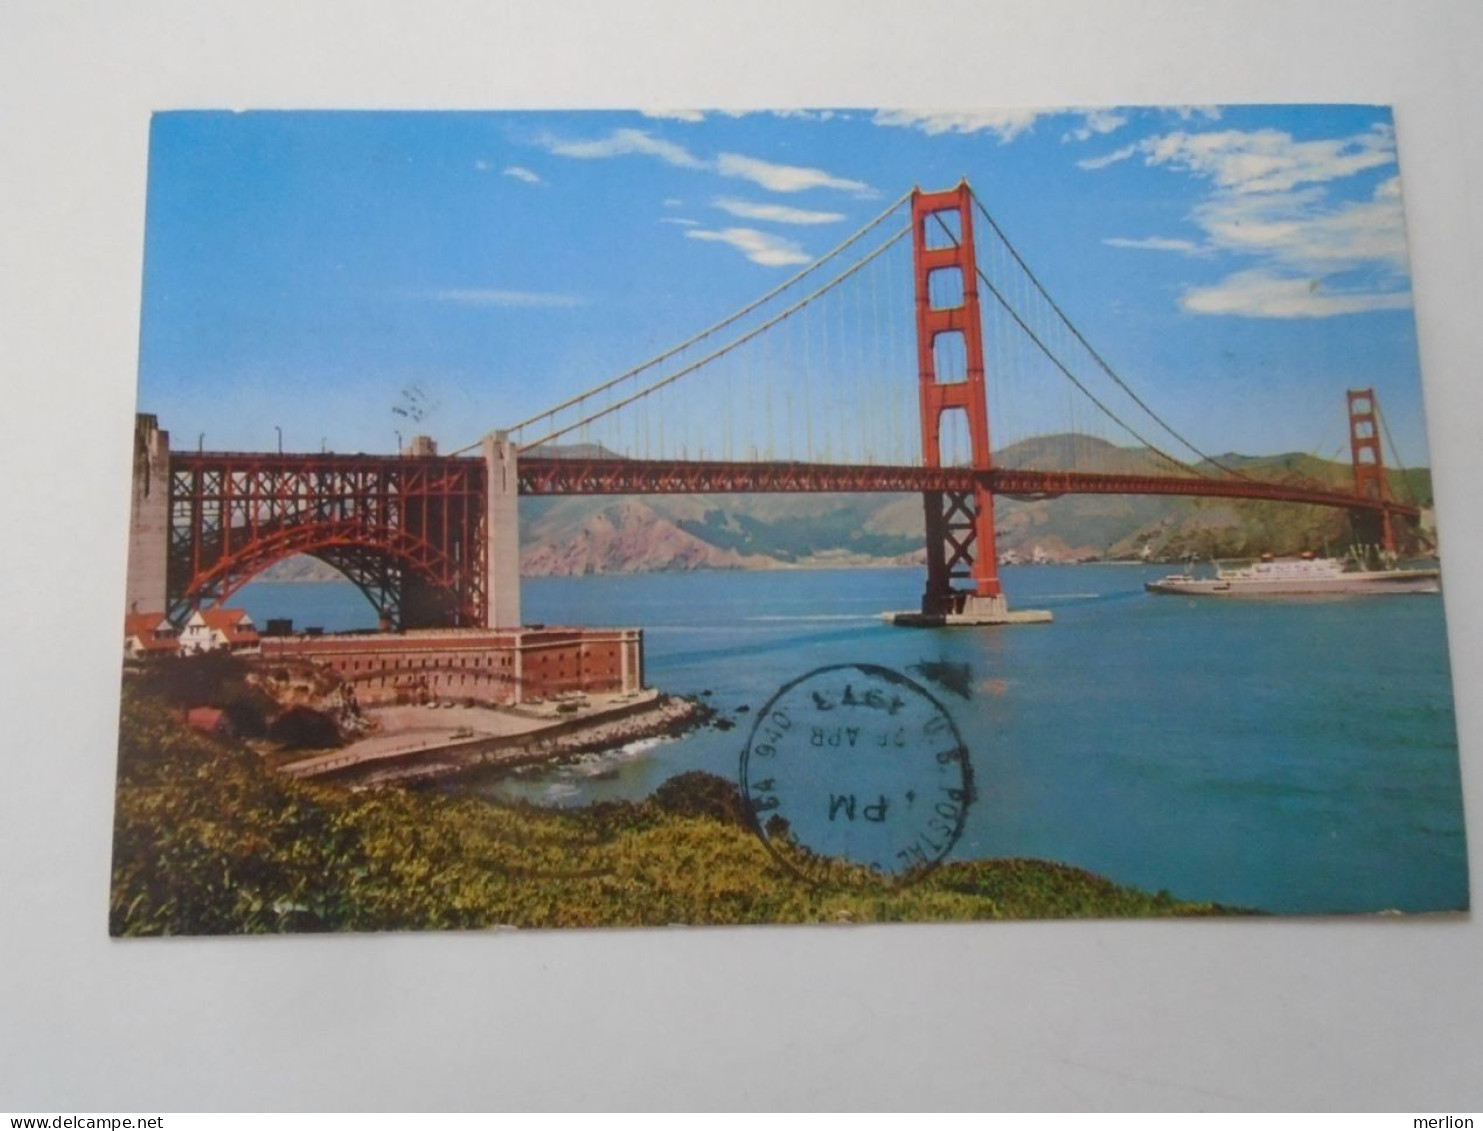 D203243  CPM - US CA - San Francisco -Golden Gate Bridge  1973 - San Francisco